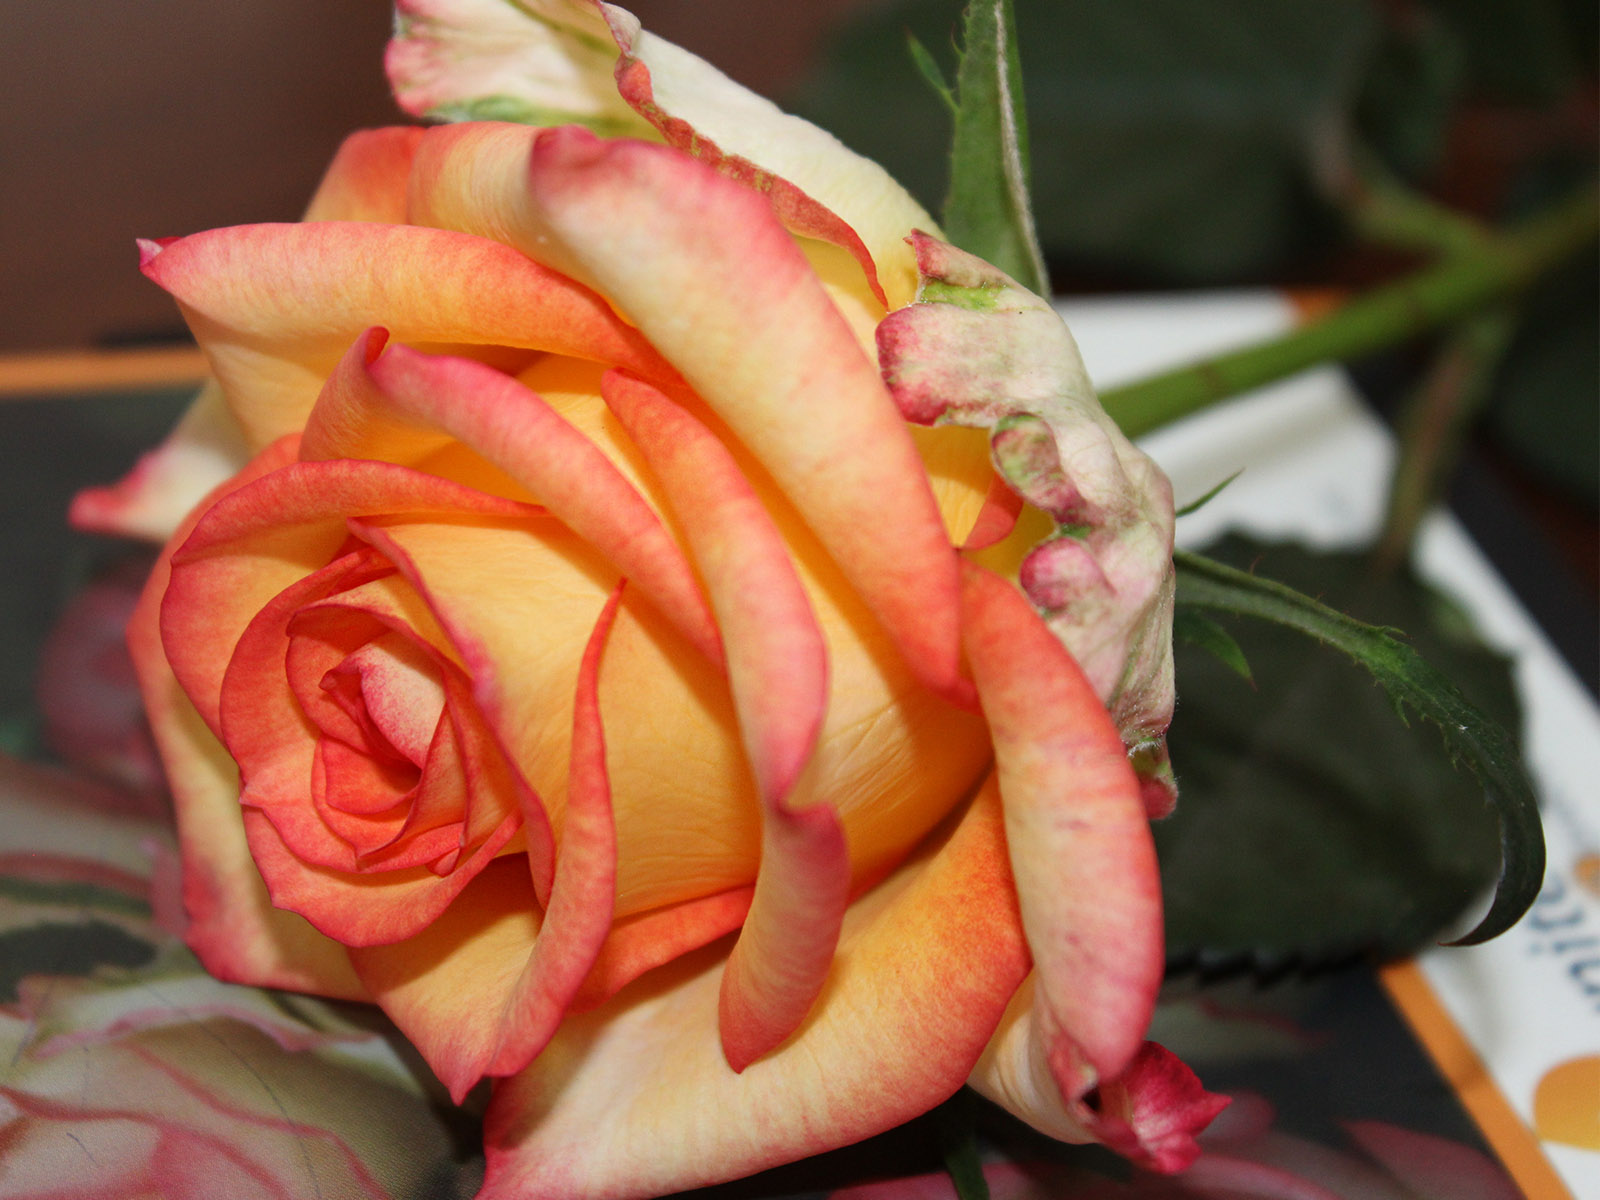 Rose High Key by Bilashaka Flowers - on Thursd